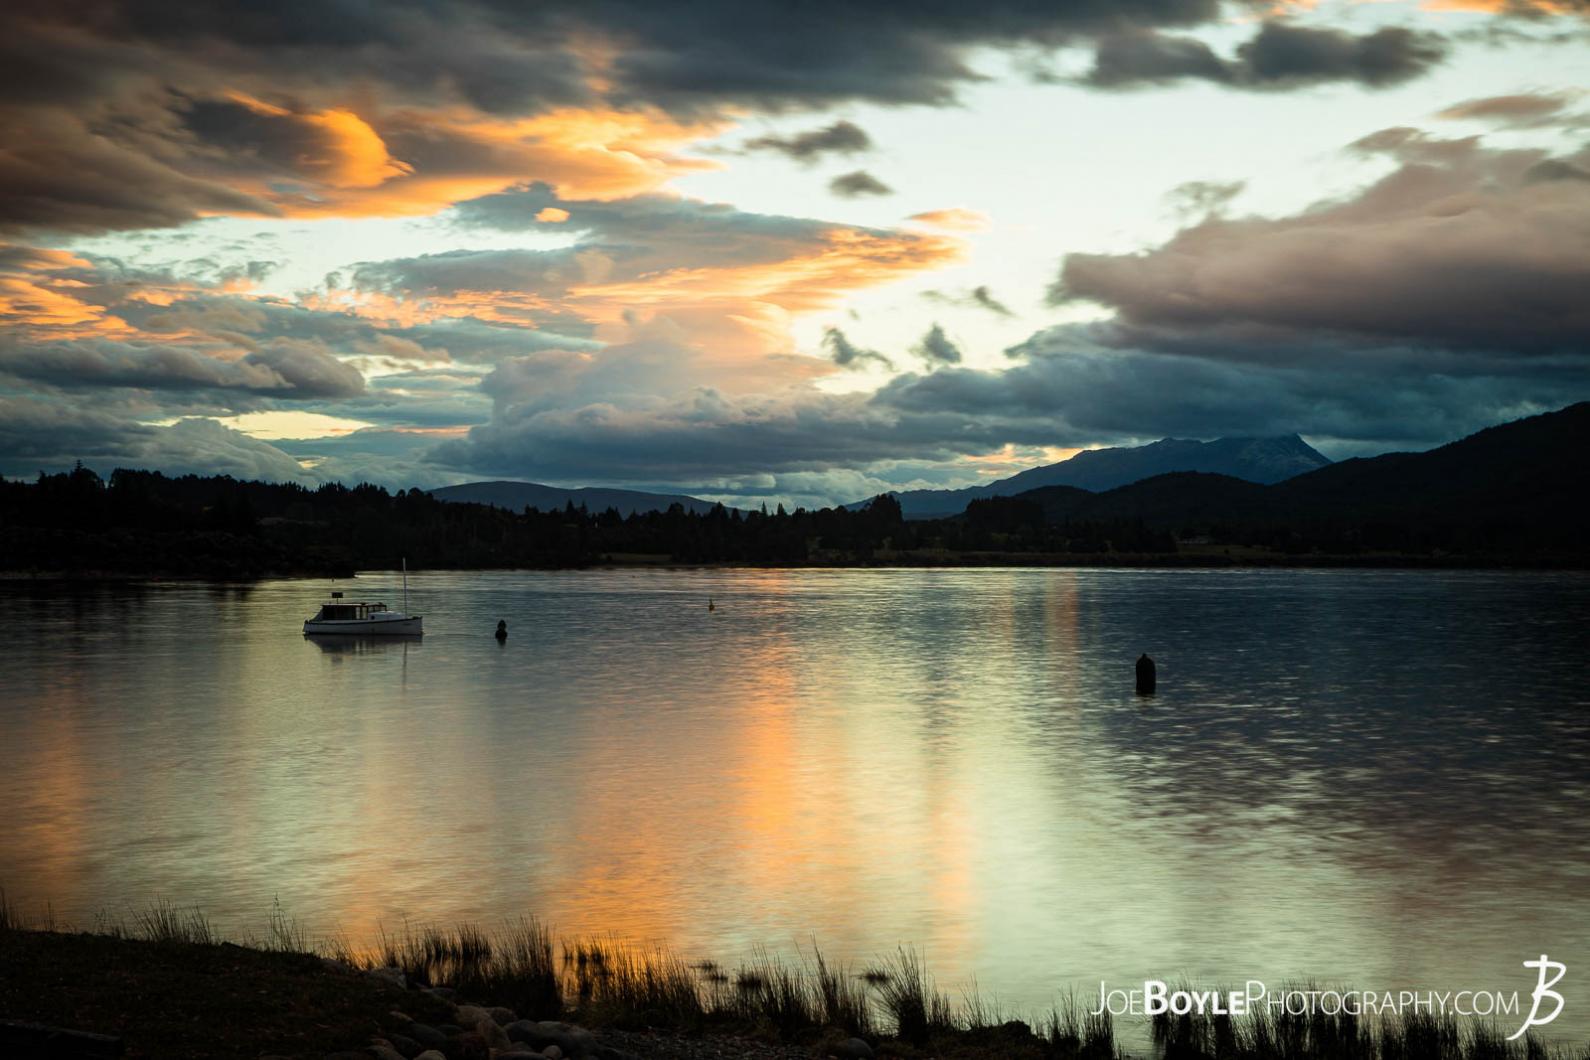 Here is a photo of Lake Te Anau at sunset.